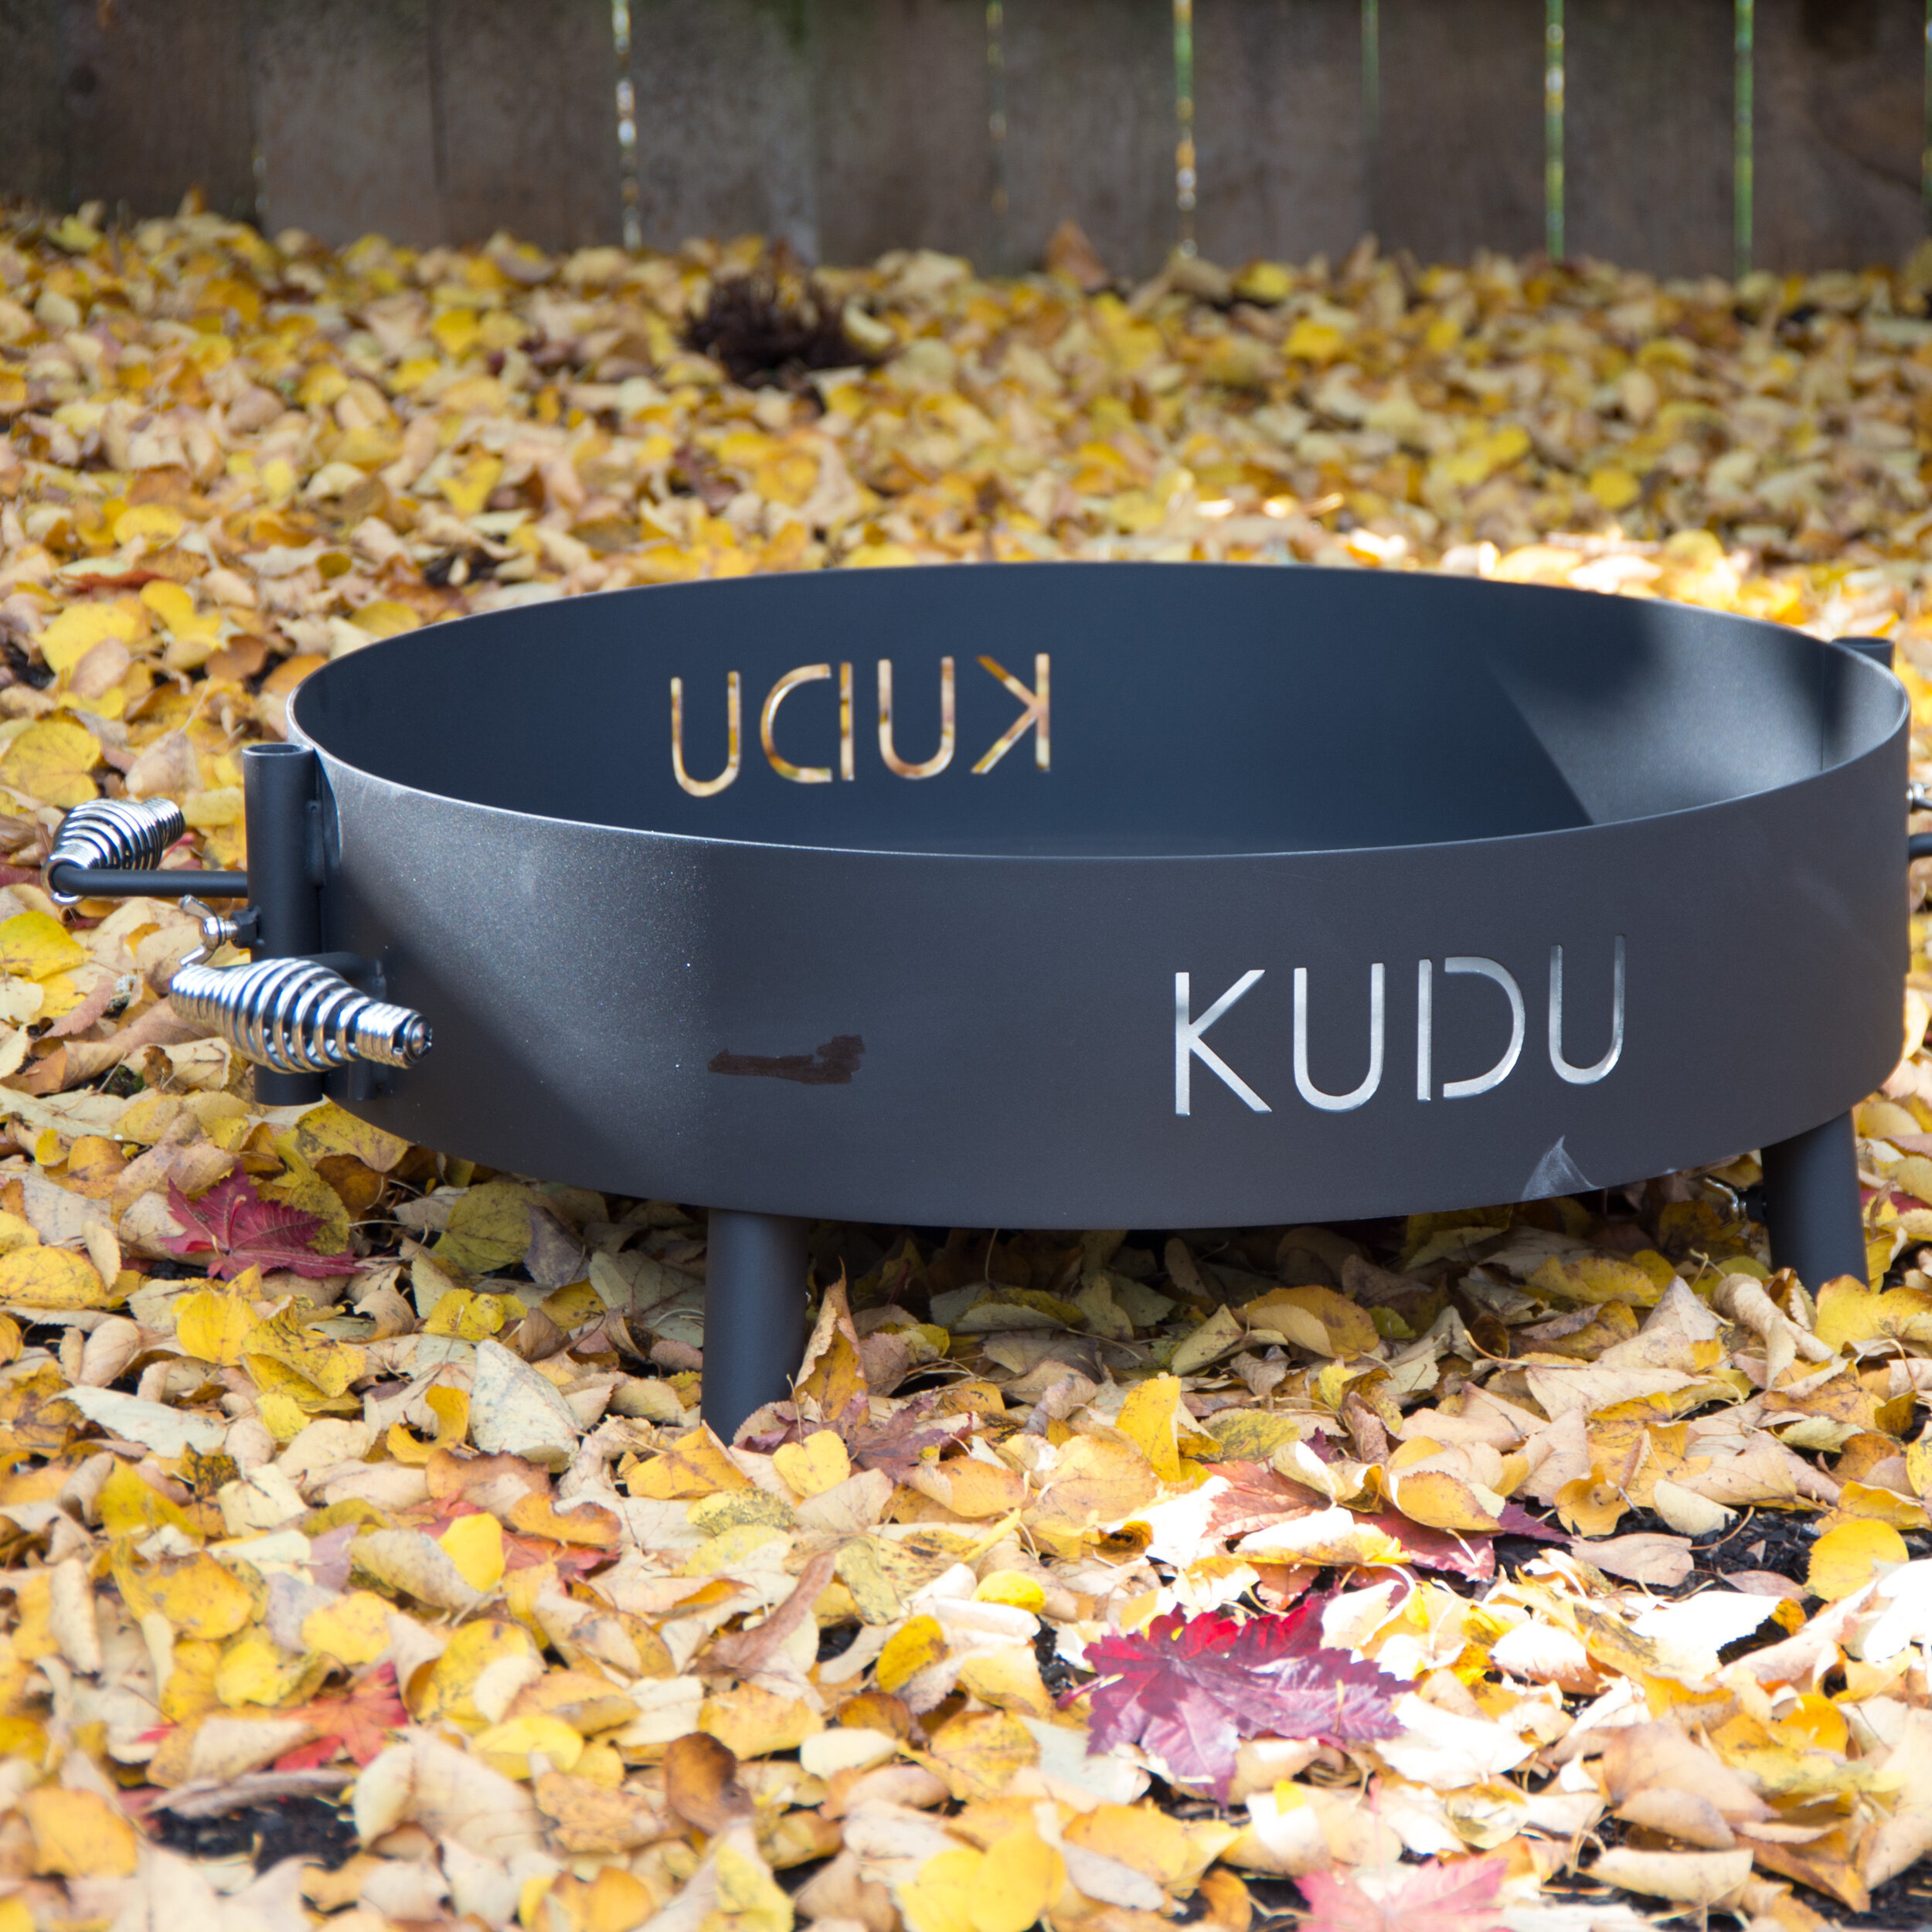 The KUDU 2 - Kudu Grills